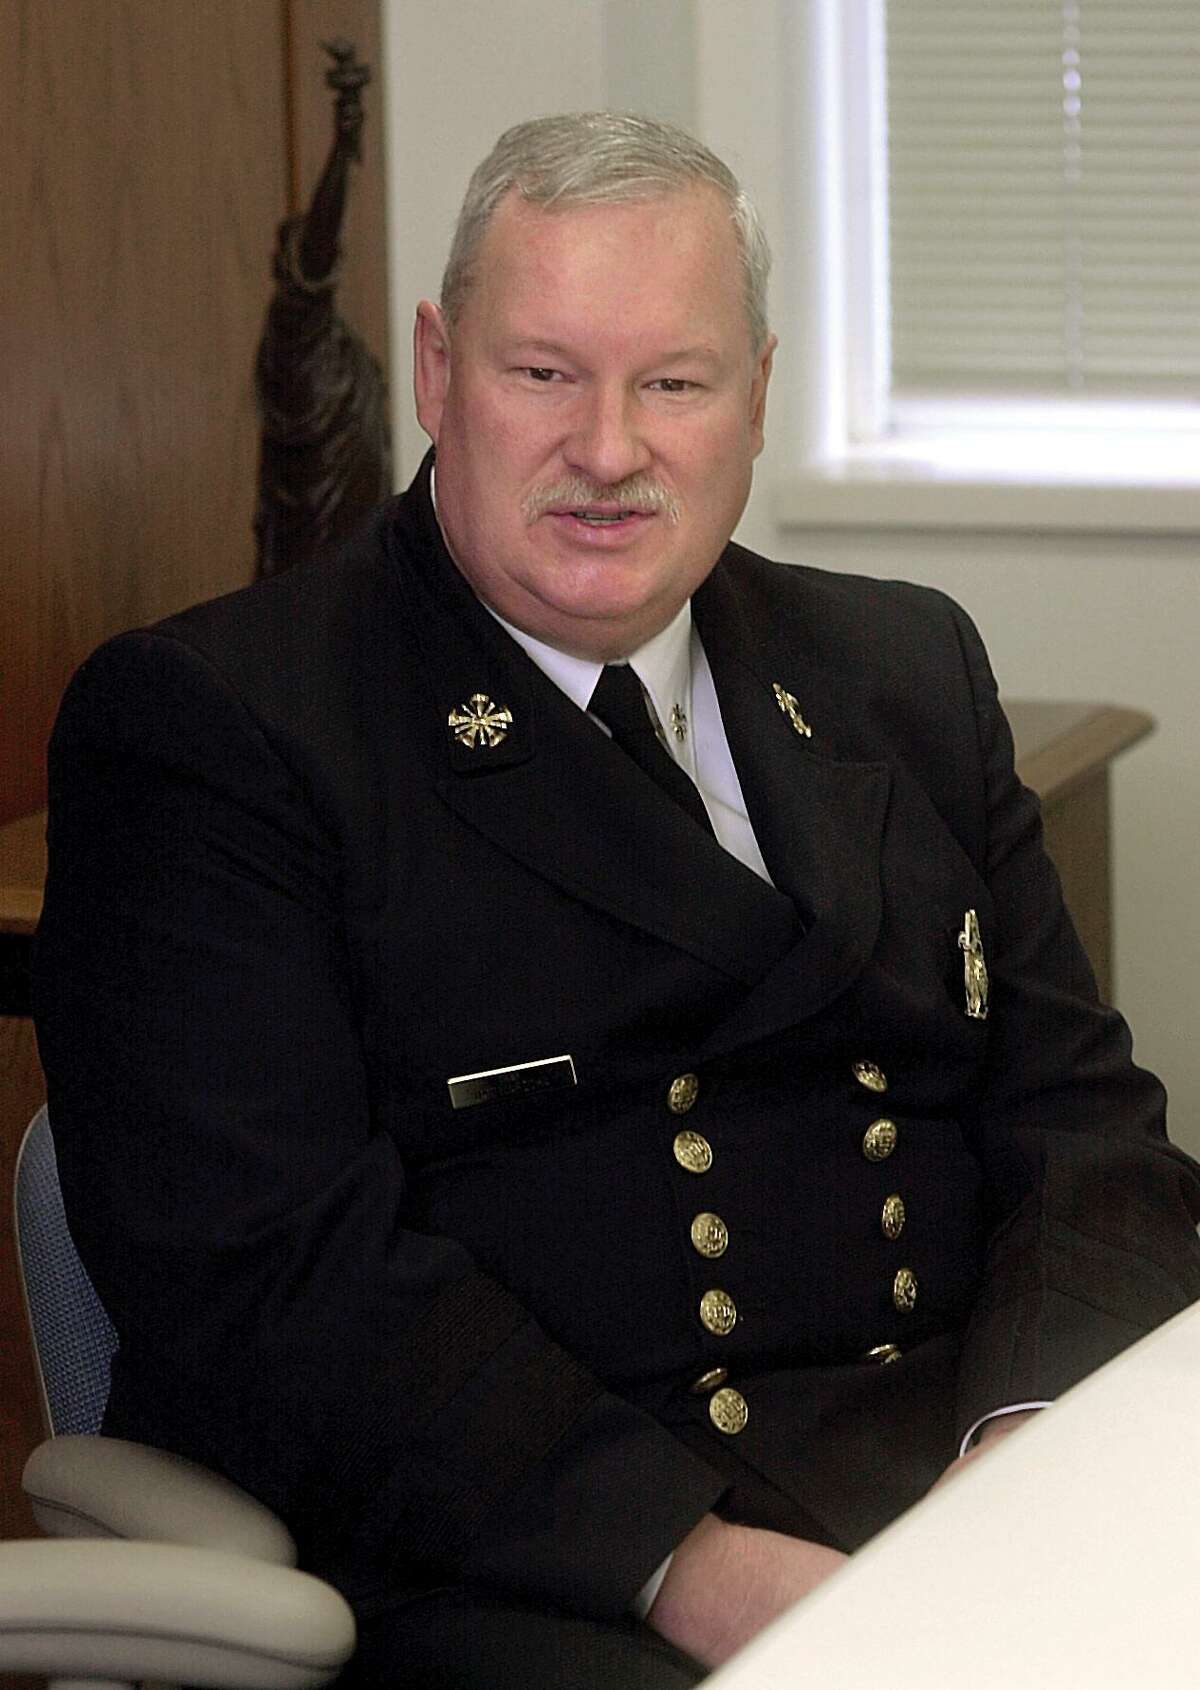 Former Fire Chief Dan Warzoha shown here in 2005.